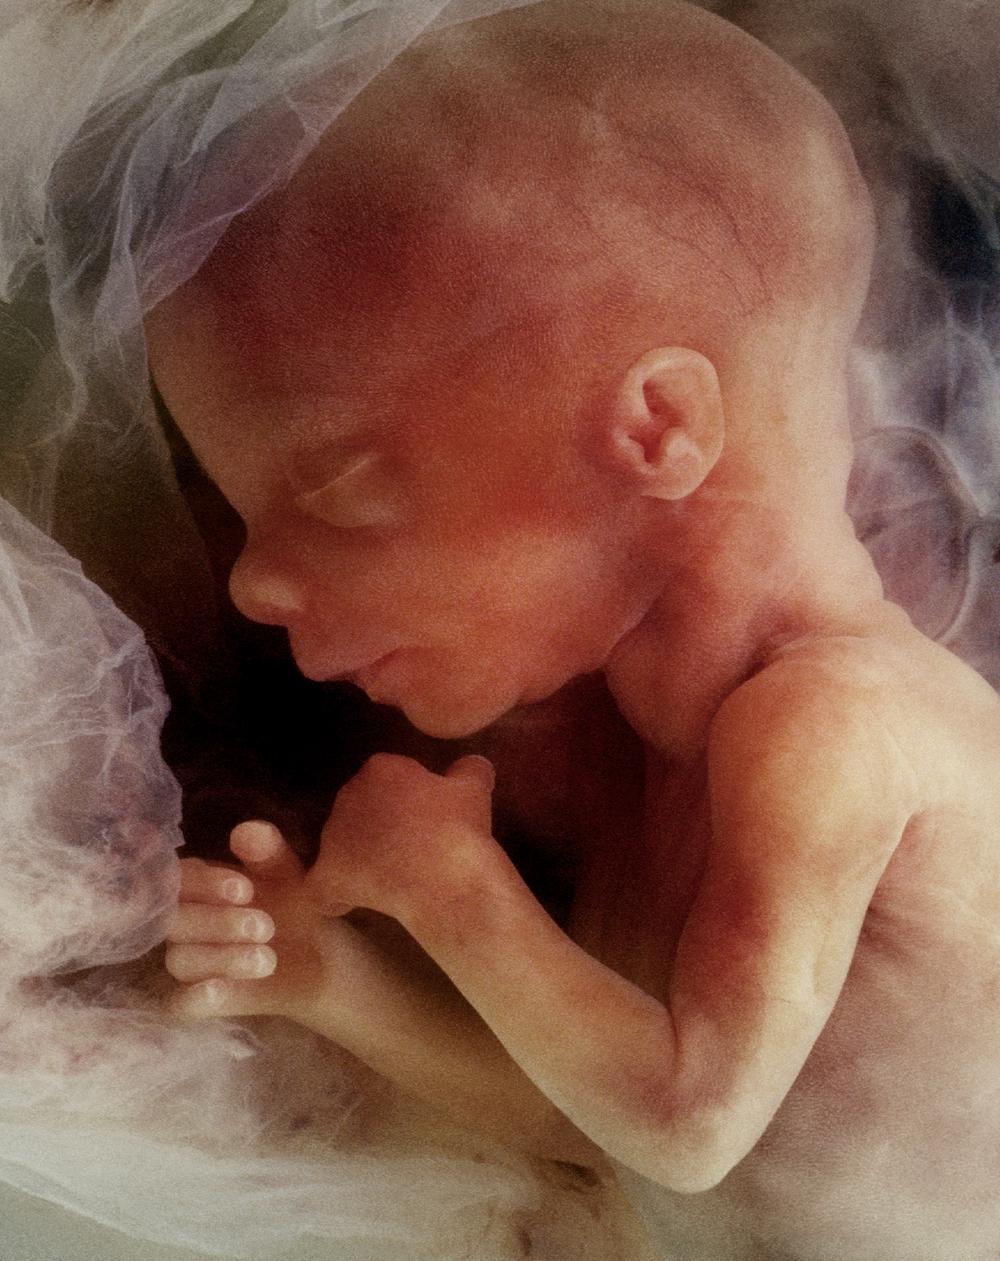 An illustration of a baby in the womb. (Steve Allen/Shutterstock)